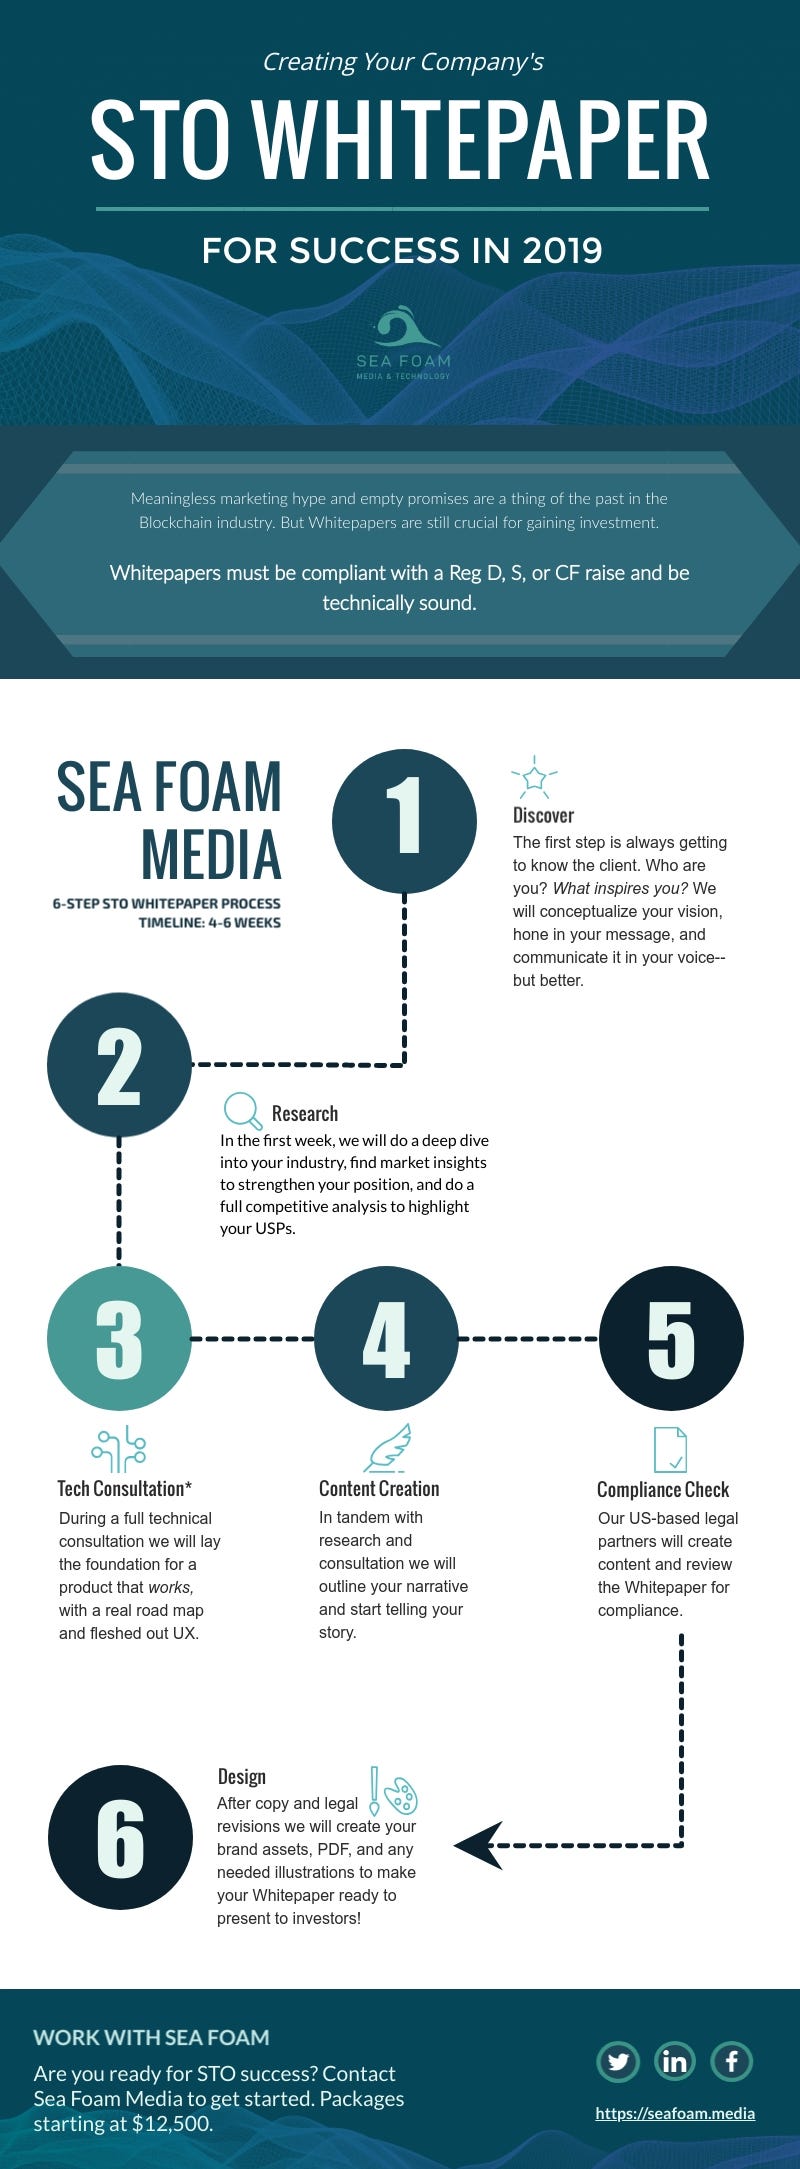 [Sea Foam Media & Tech](https://seafoam.media){:target="_blank"} whitepaper infographic, created by me in [Visme](https://visme.co){:target="_blank"}